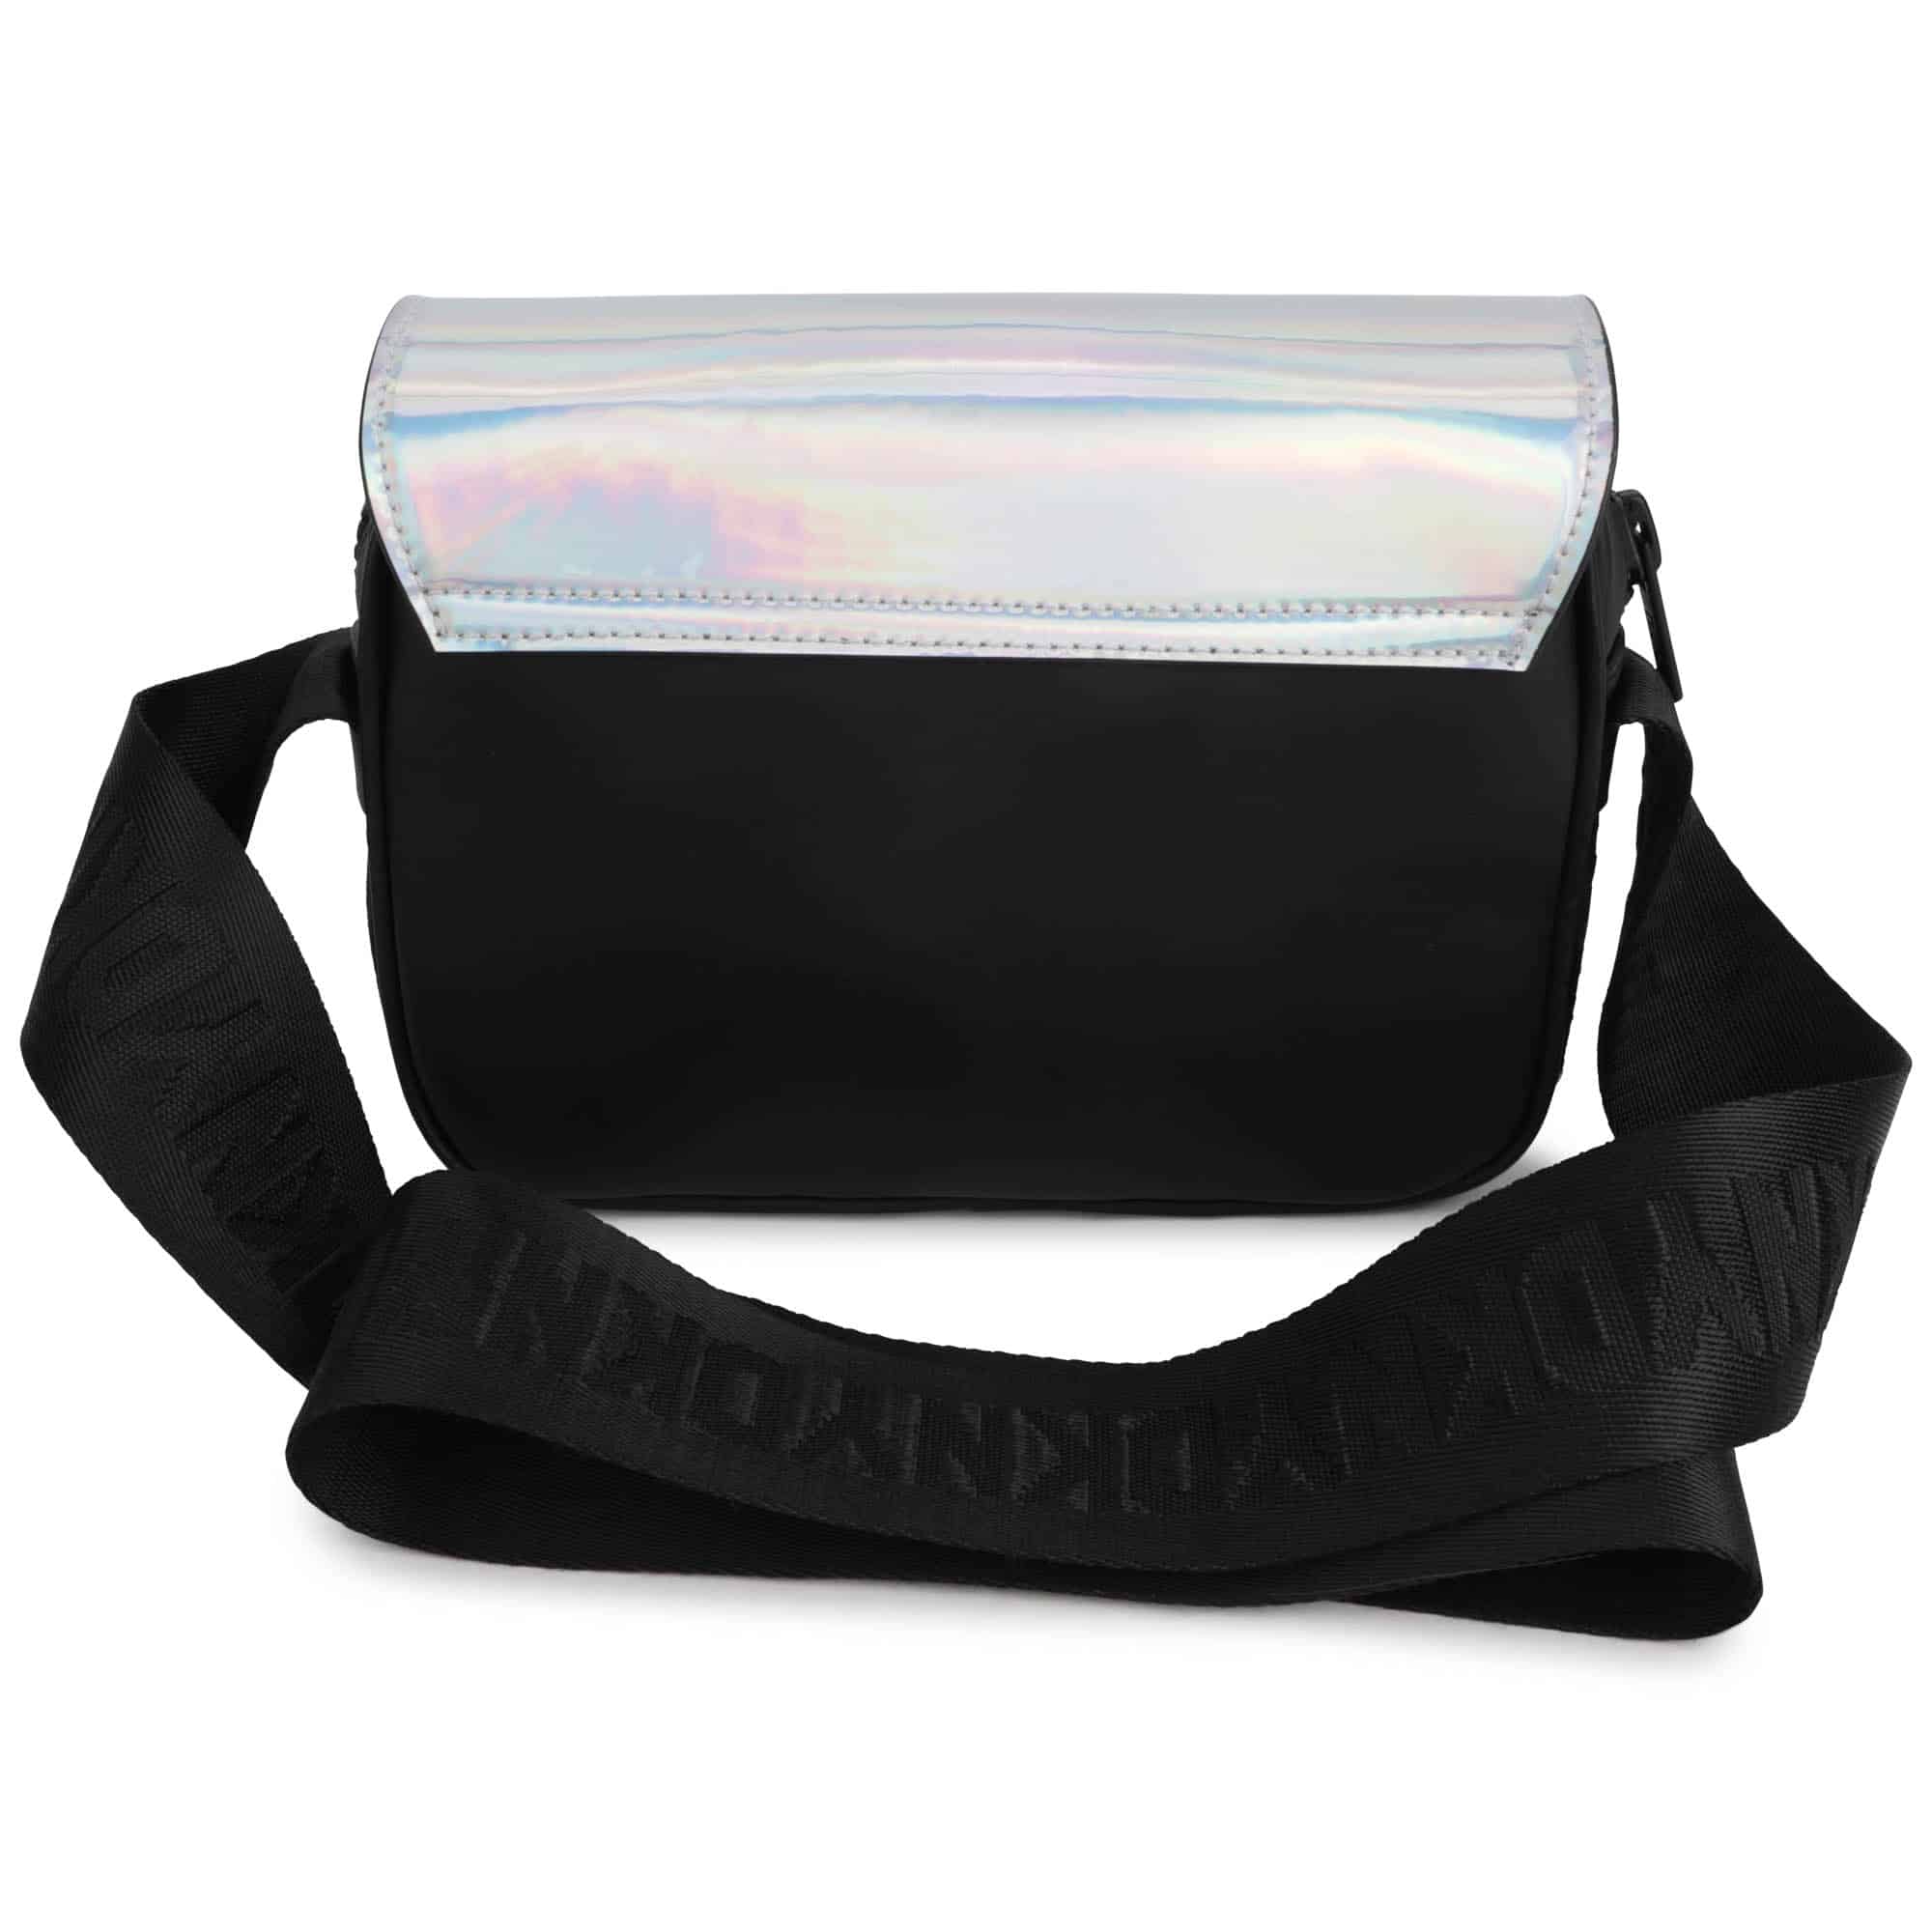 DKNY girls silver handbag with white logo back view